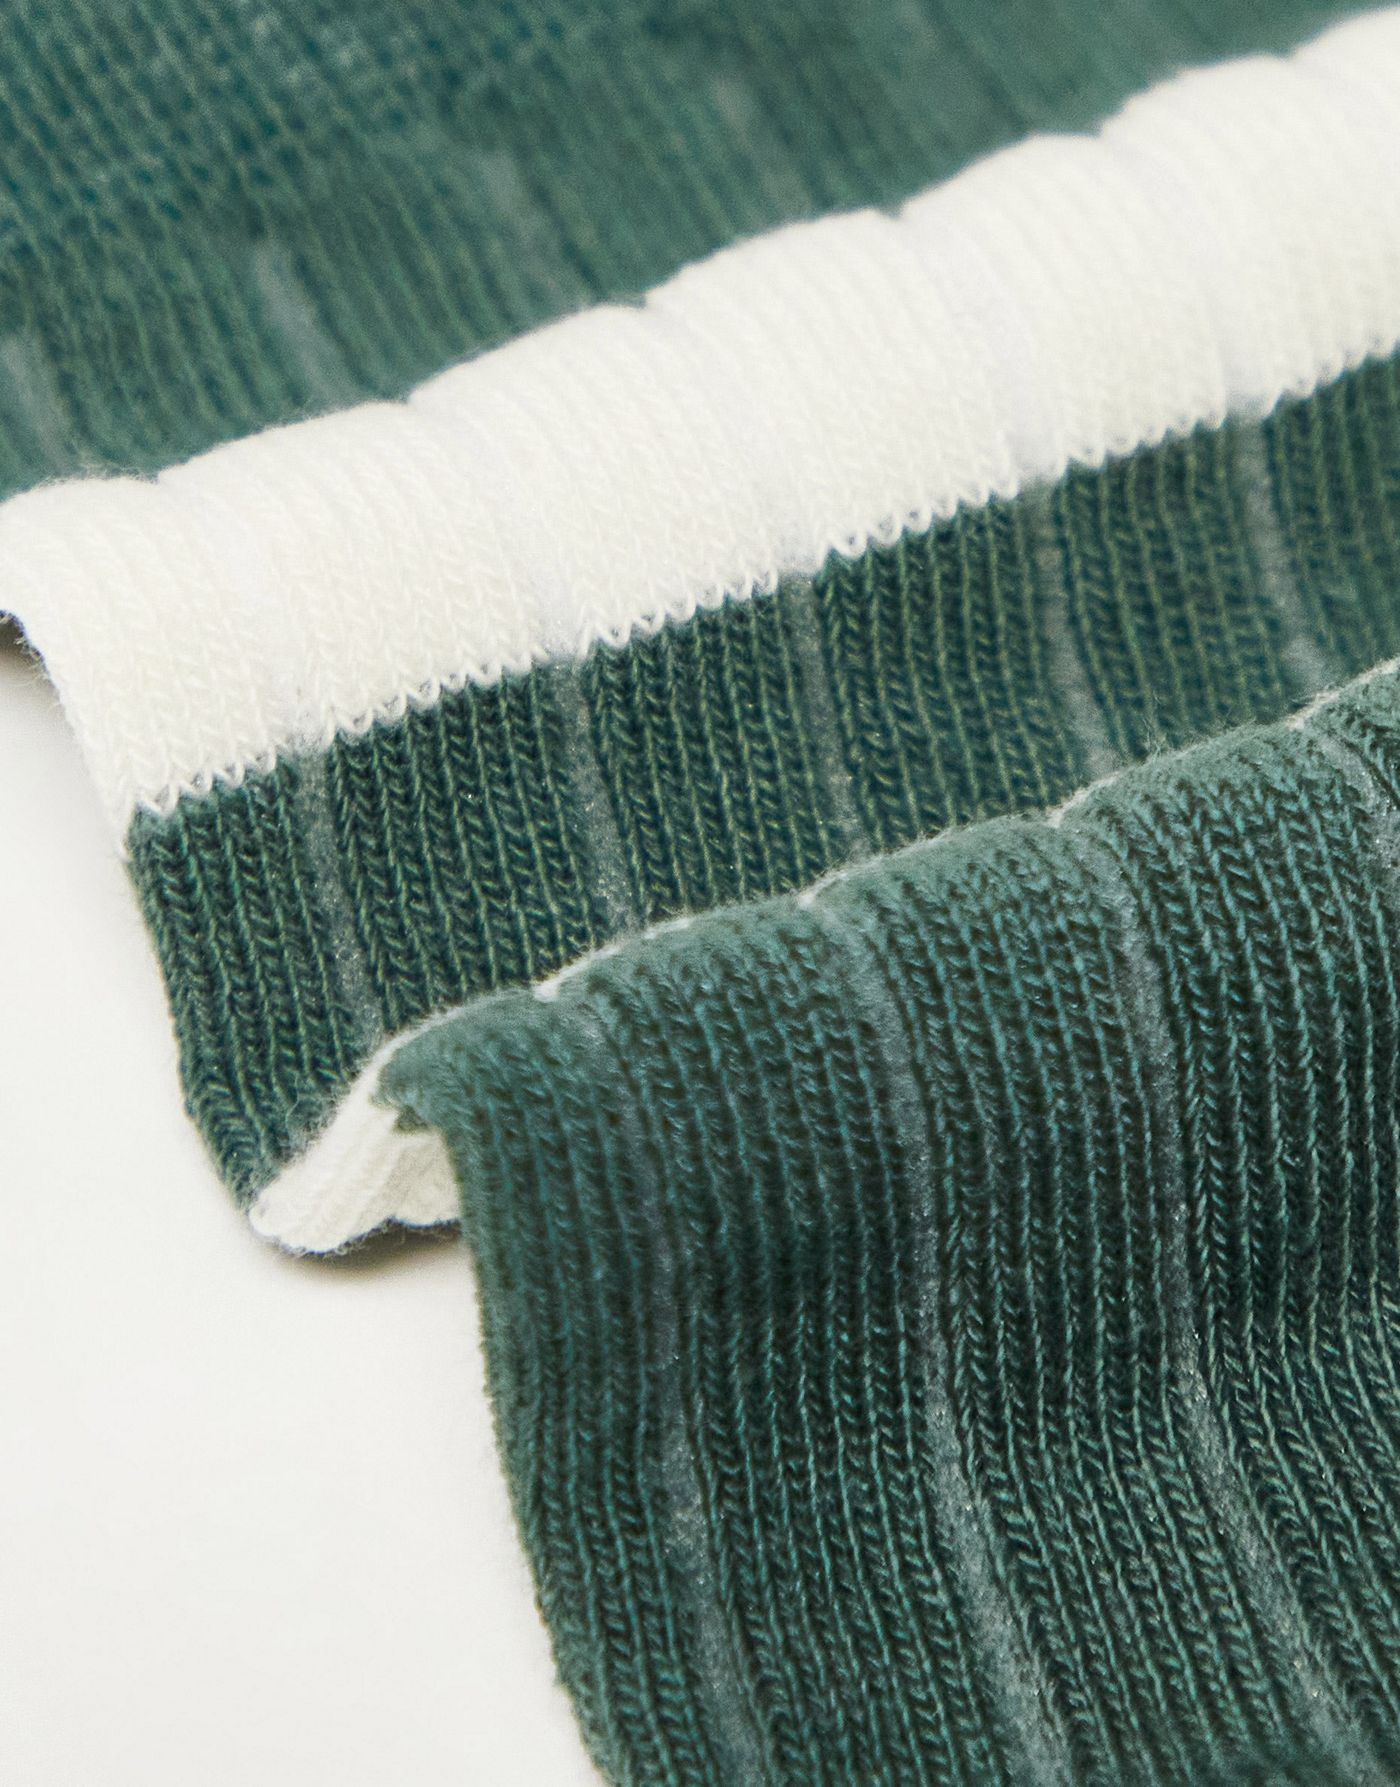 ASOS DESIGN 3 pack stripe ribbed ankle socks in green and ecru